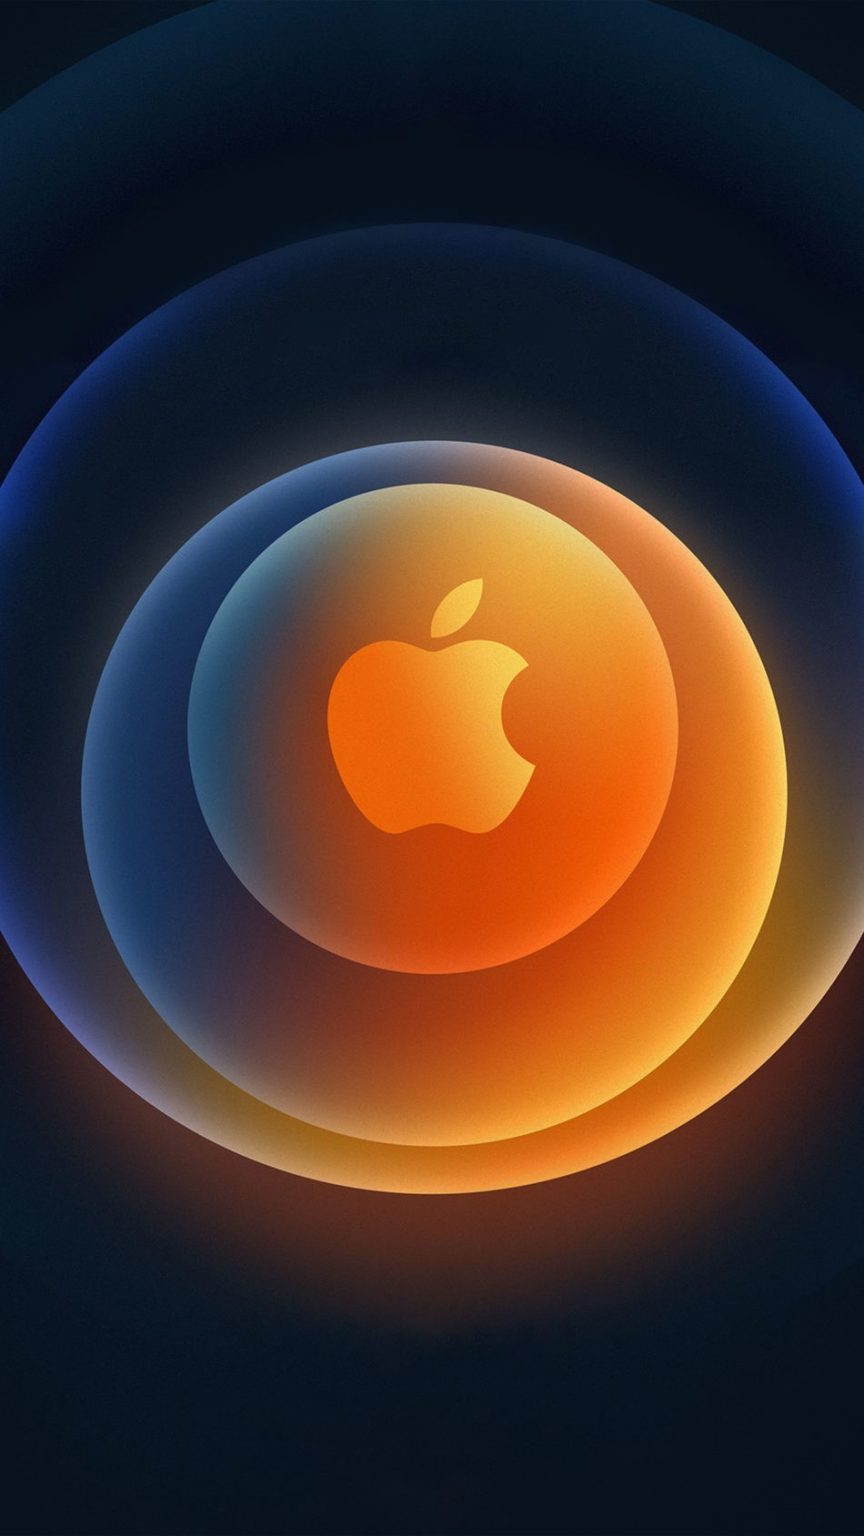 Apple iPhone 12 Logo 4K Ultra HD Wallpaper Wallpaper Download - High